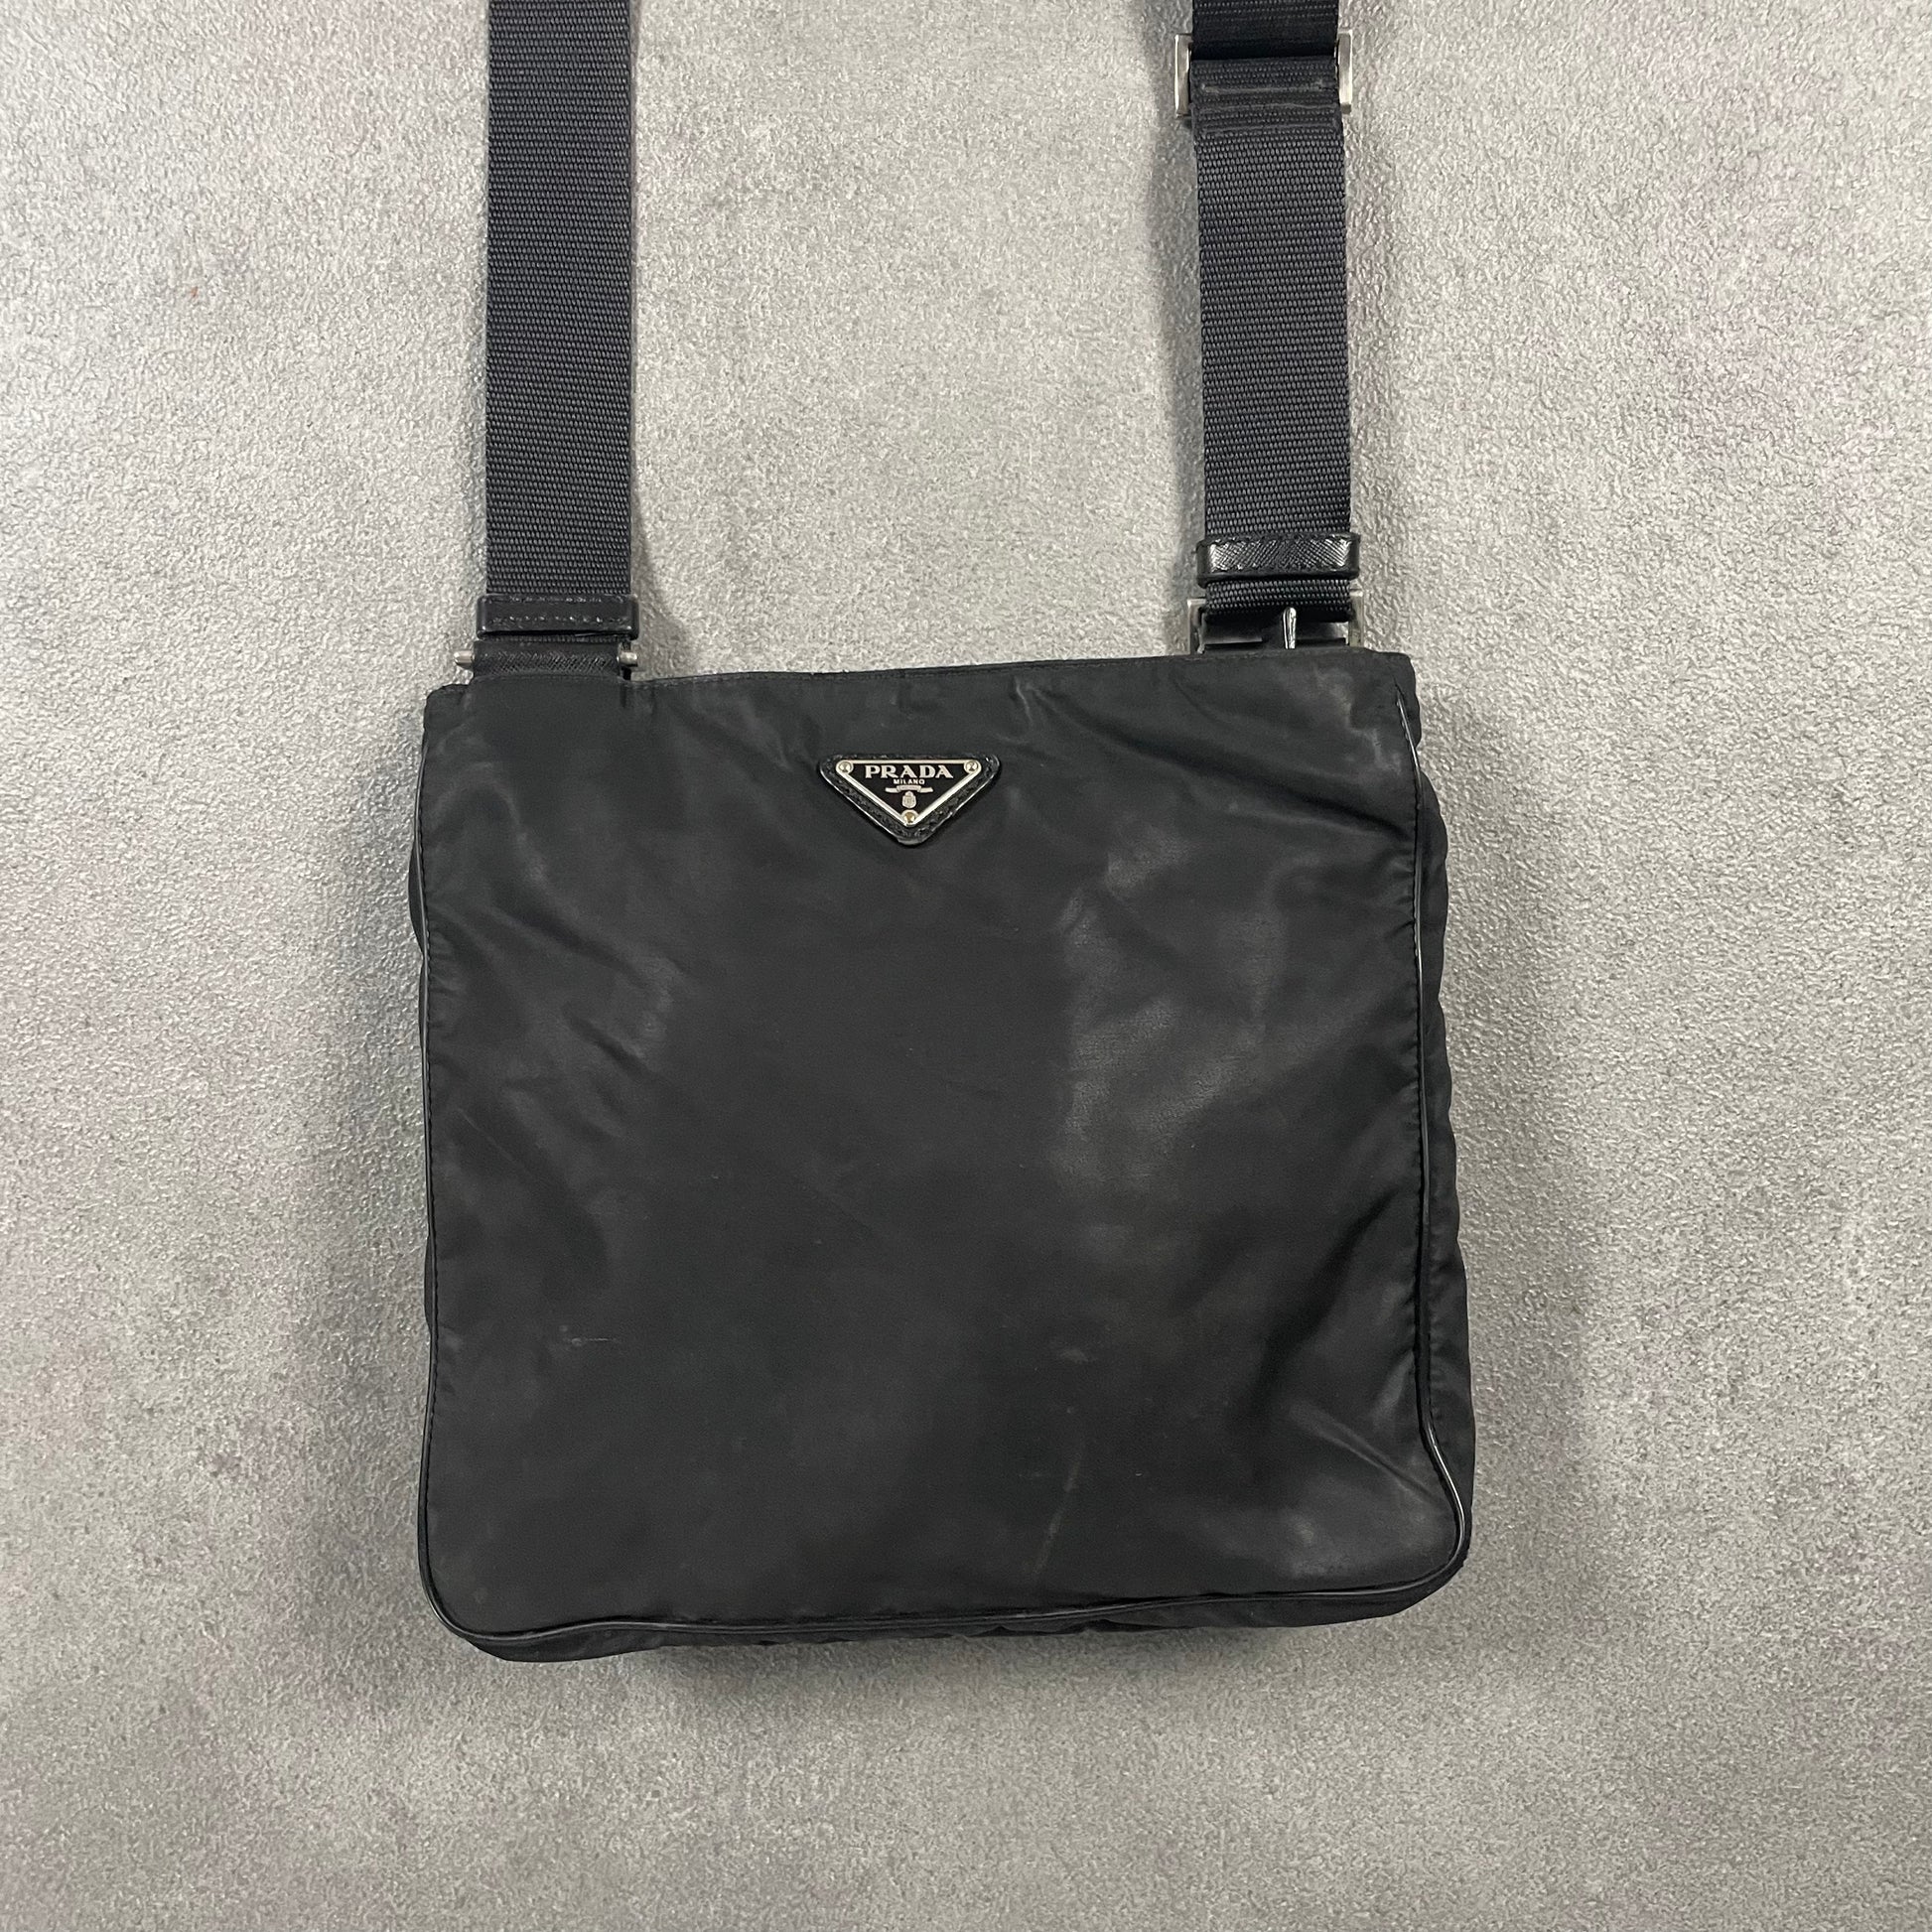 Prada Multi Pocket Side Bag